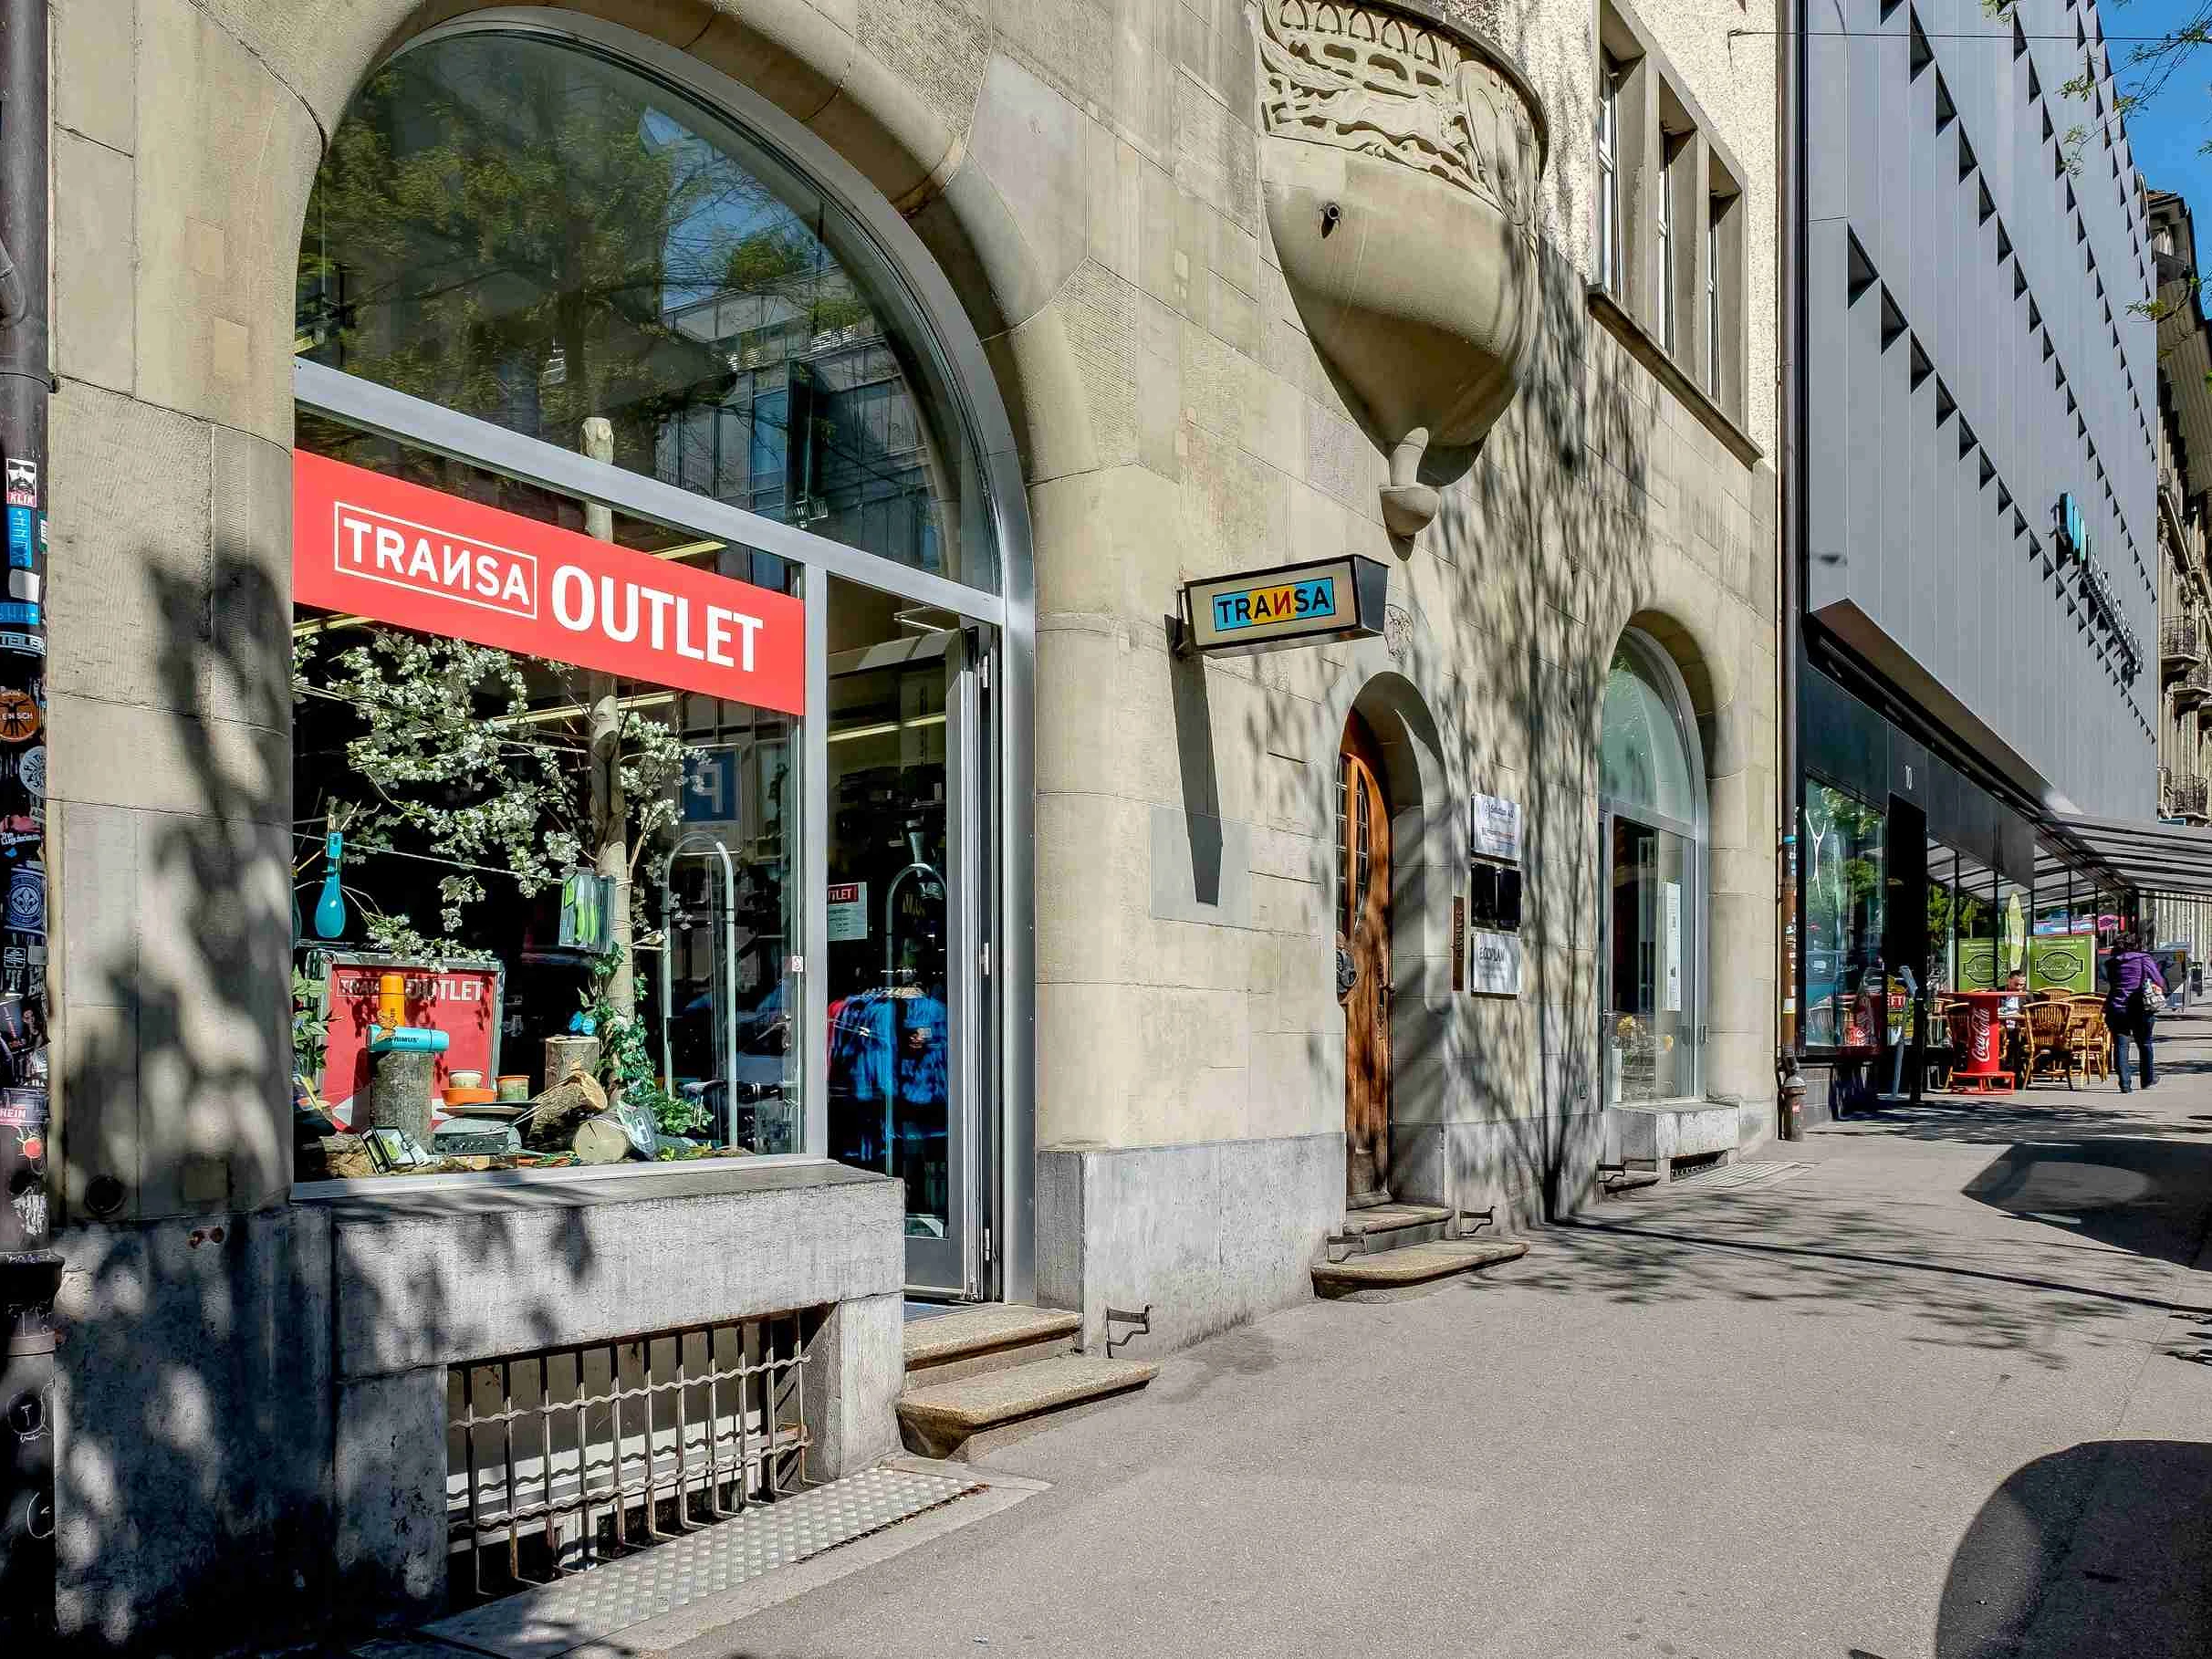 Transa Outlet, Bern